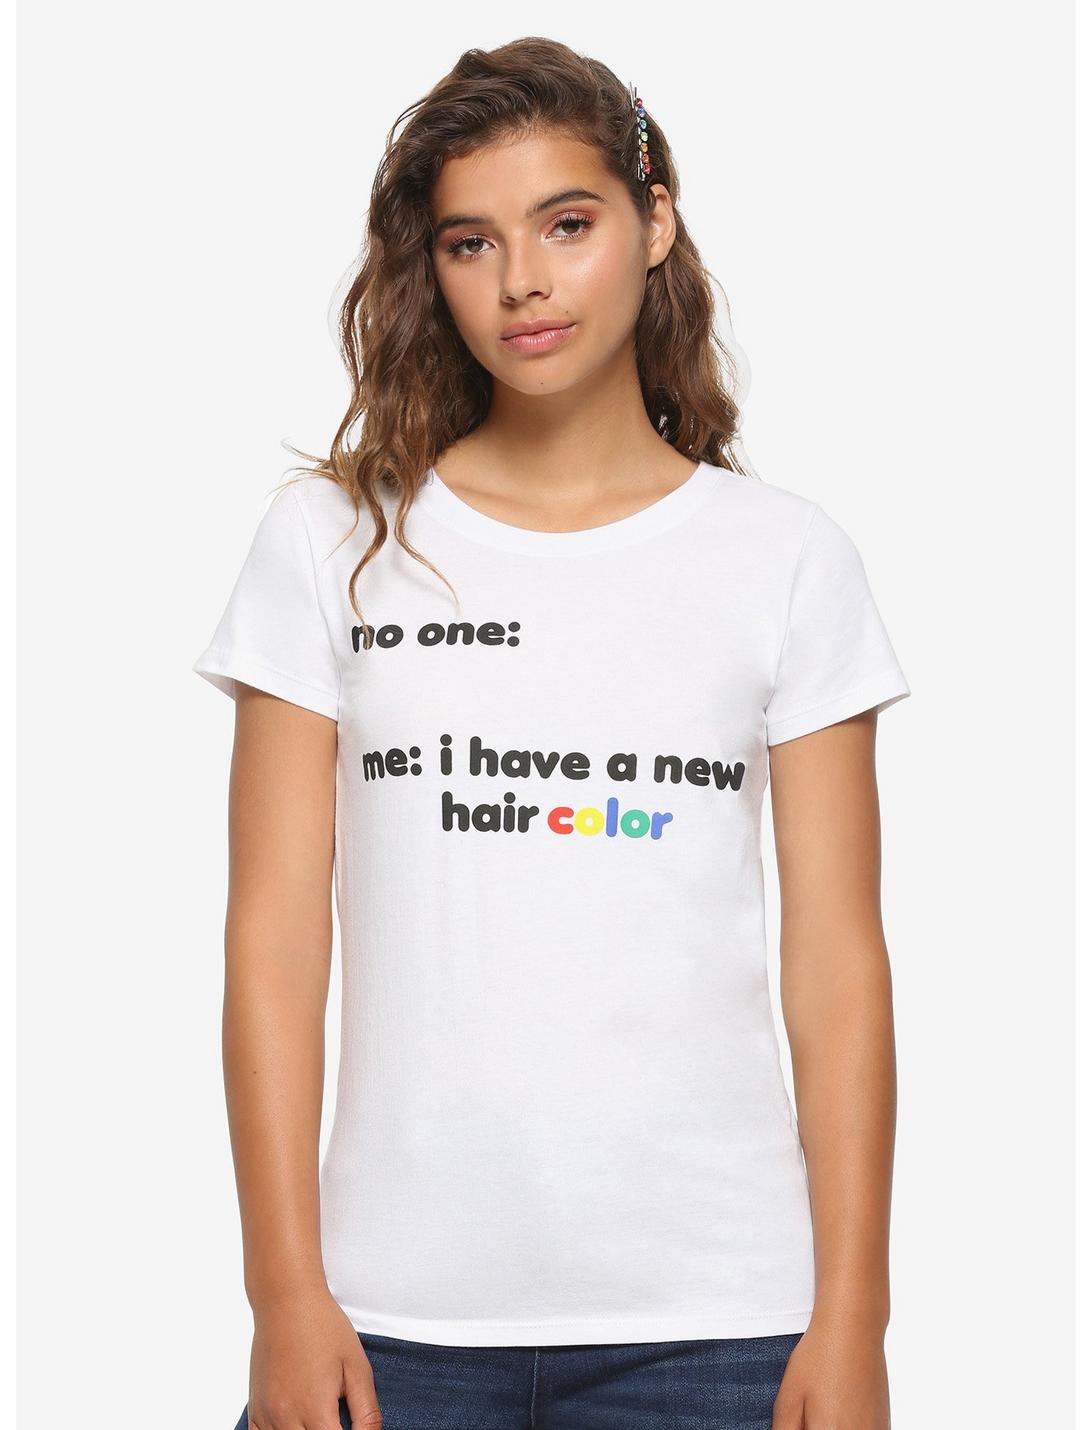 Jessie Paege Hair Color Girls T-Shirt, MULTI, hi-res